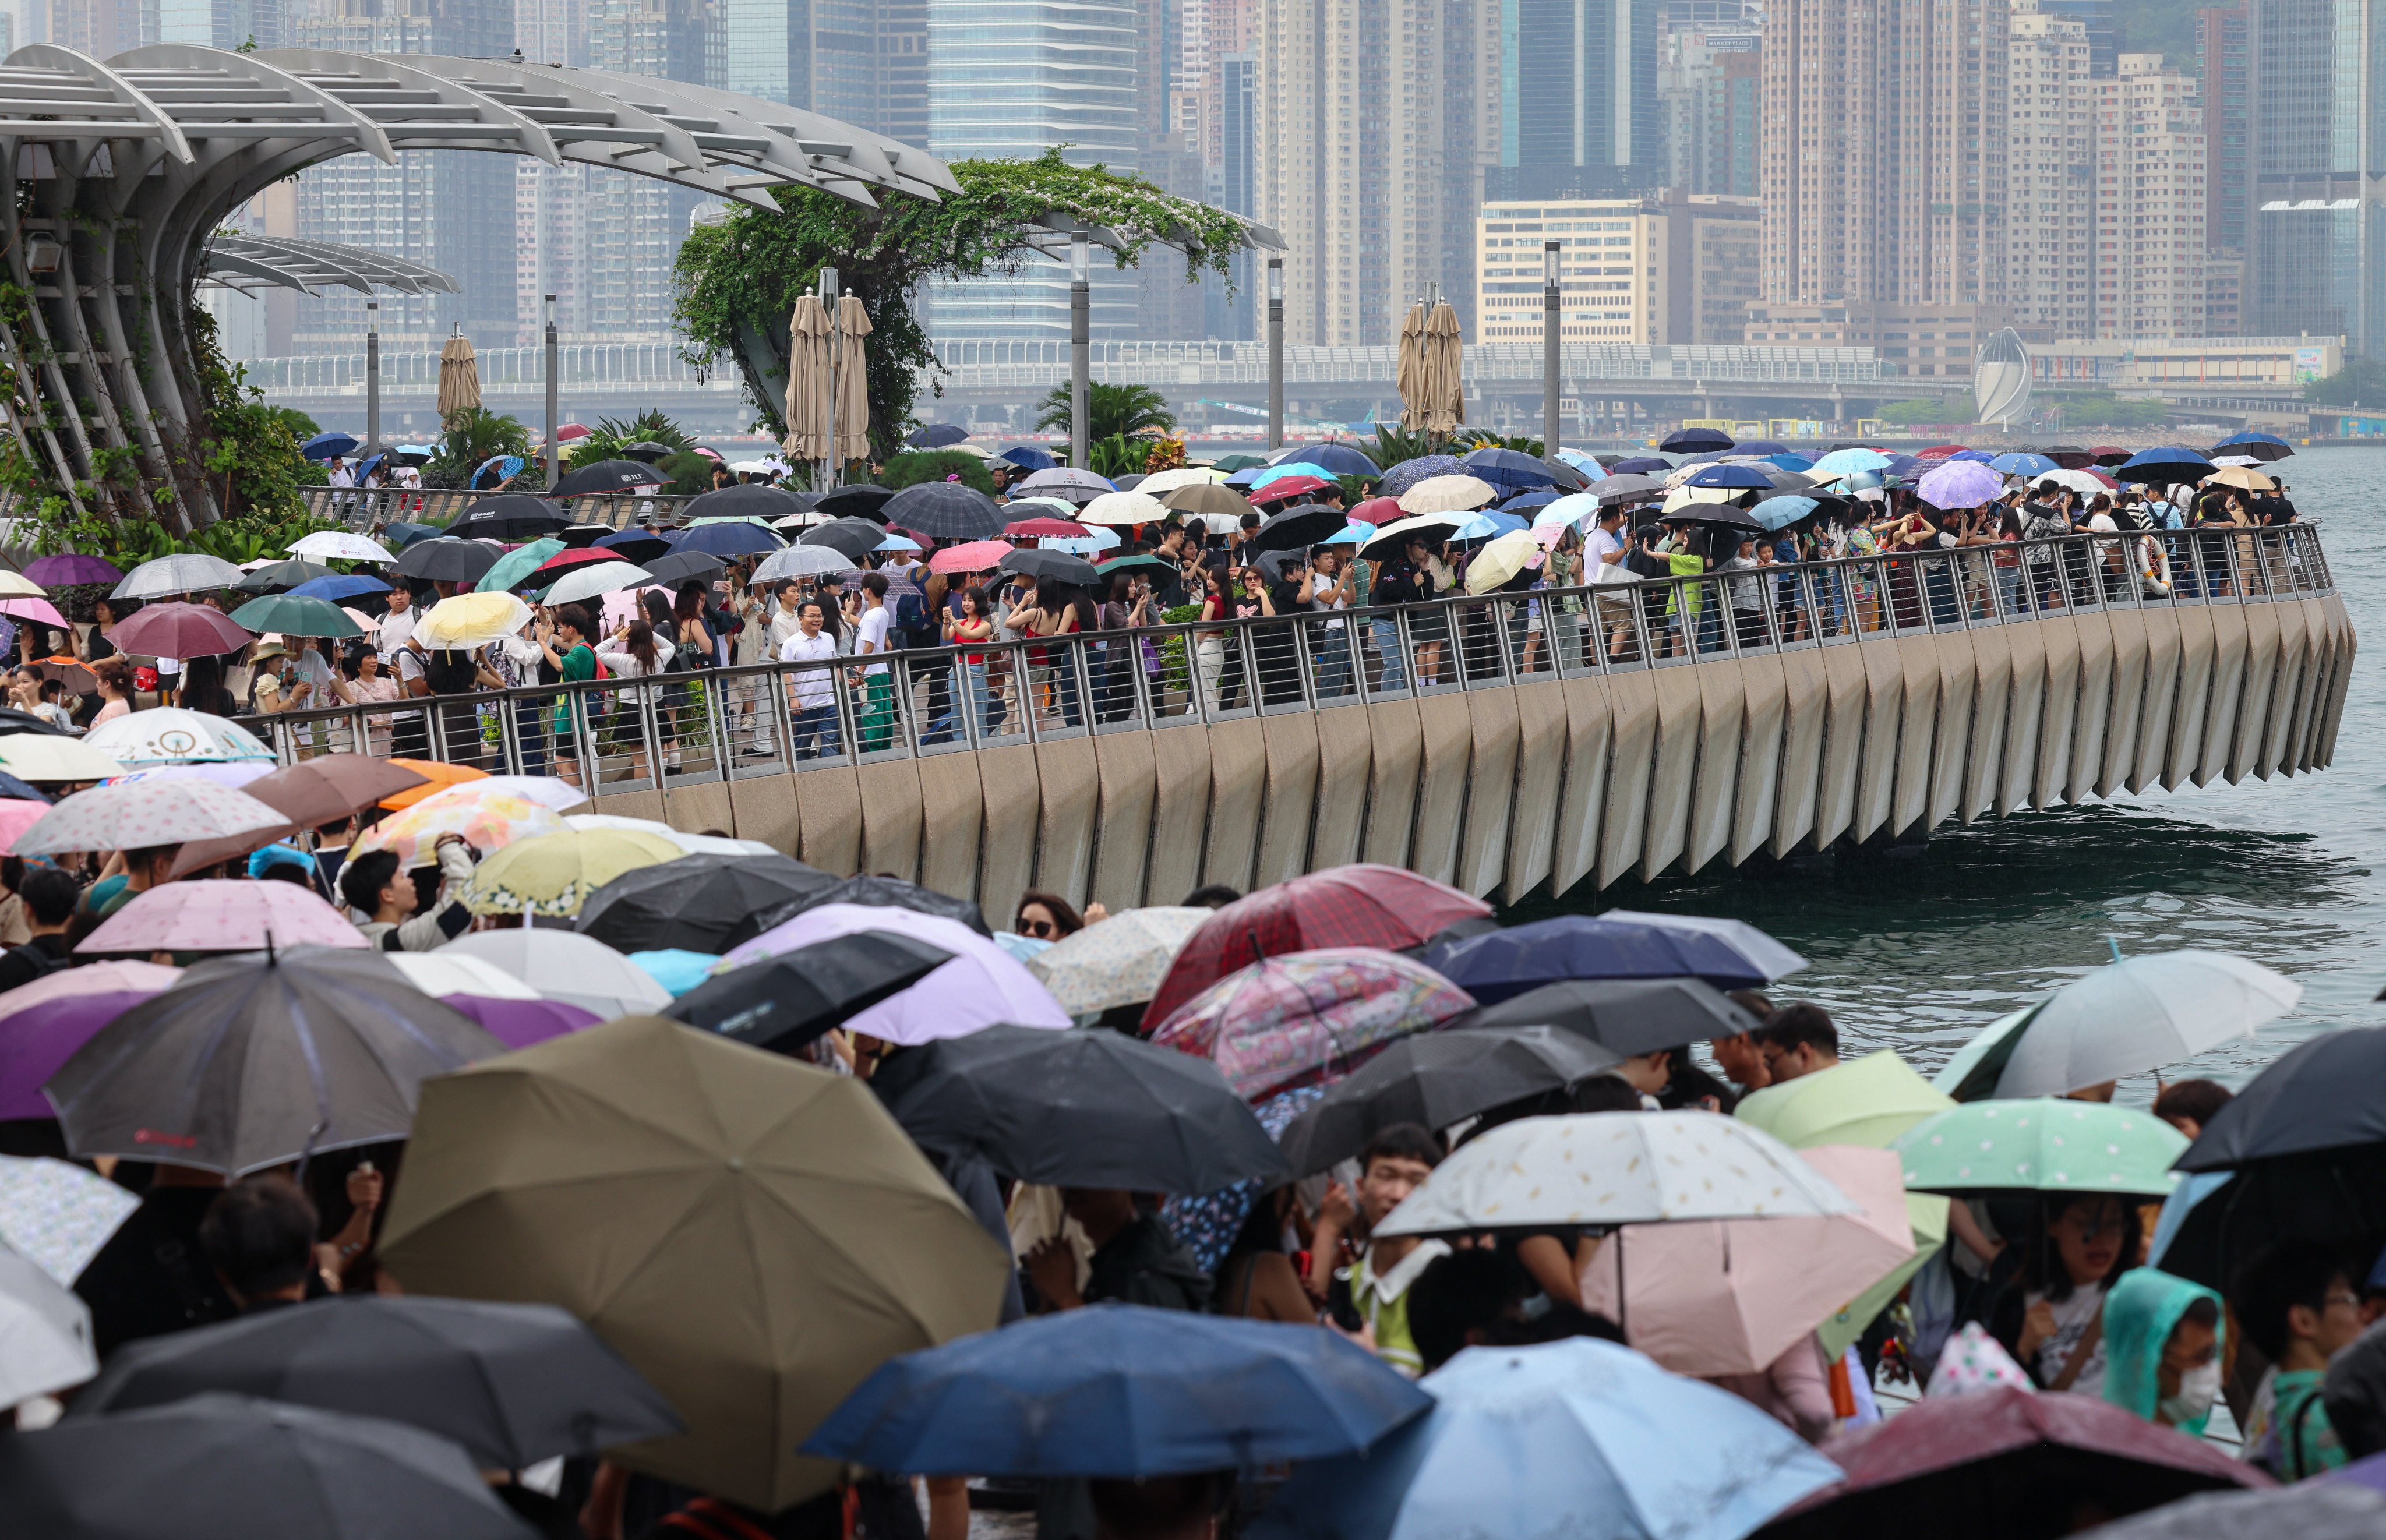 Visitors flock to the promenade overlooking Victoria Harbour in Tsim Sha Tsui despite rainy and cloudy conditions. Photo: Jelly Tse